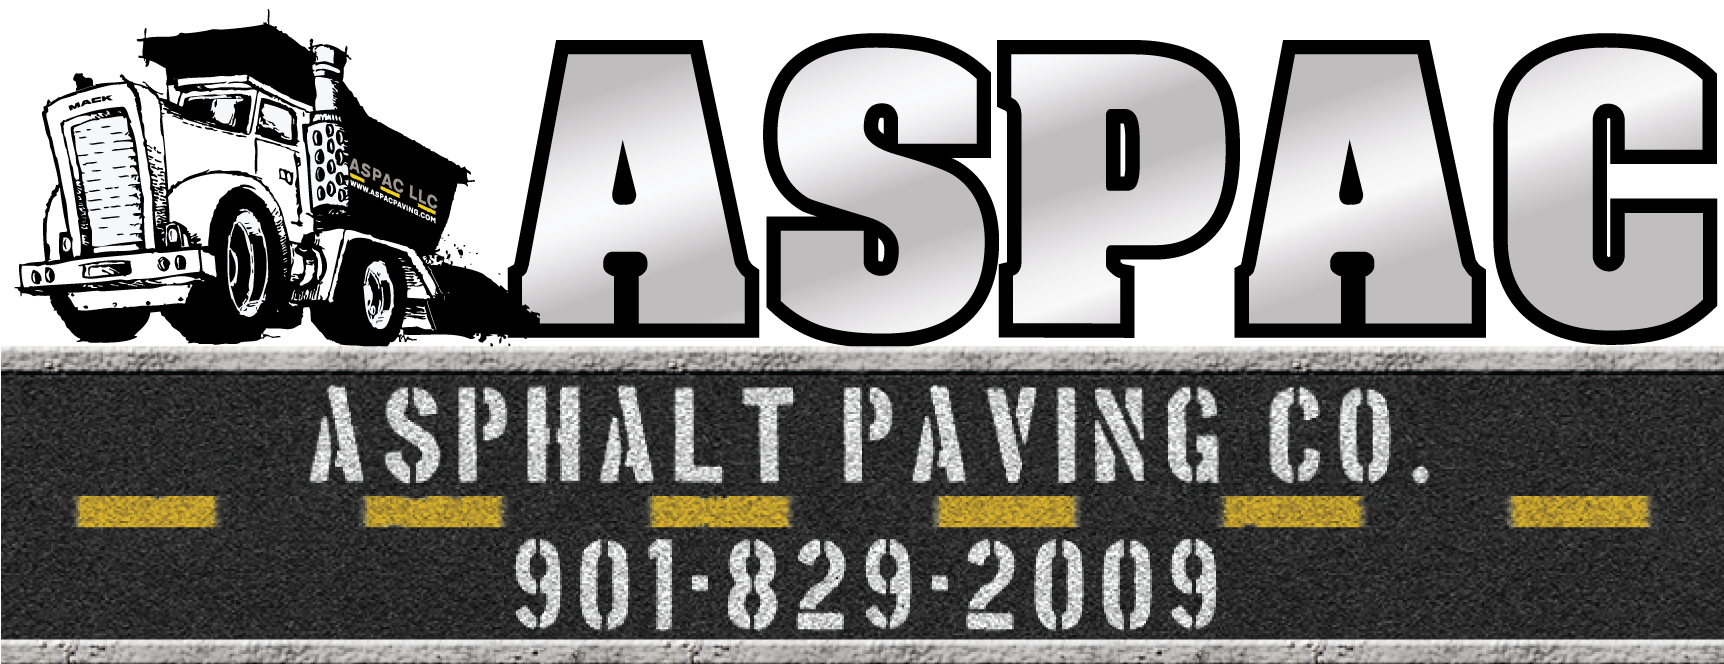 ASPAC Paving Co. Logo